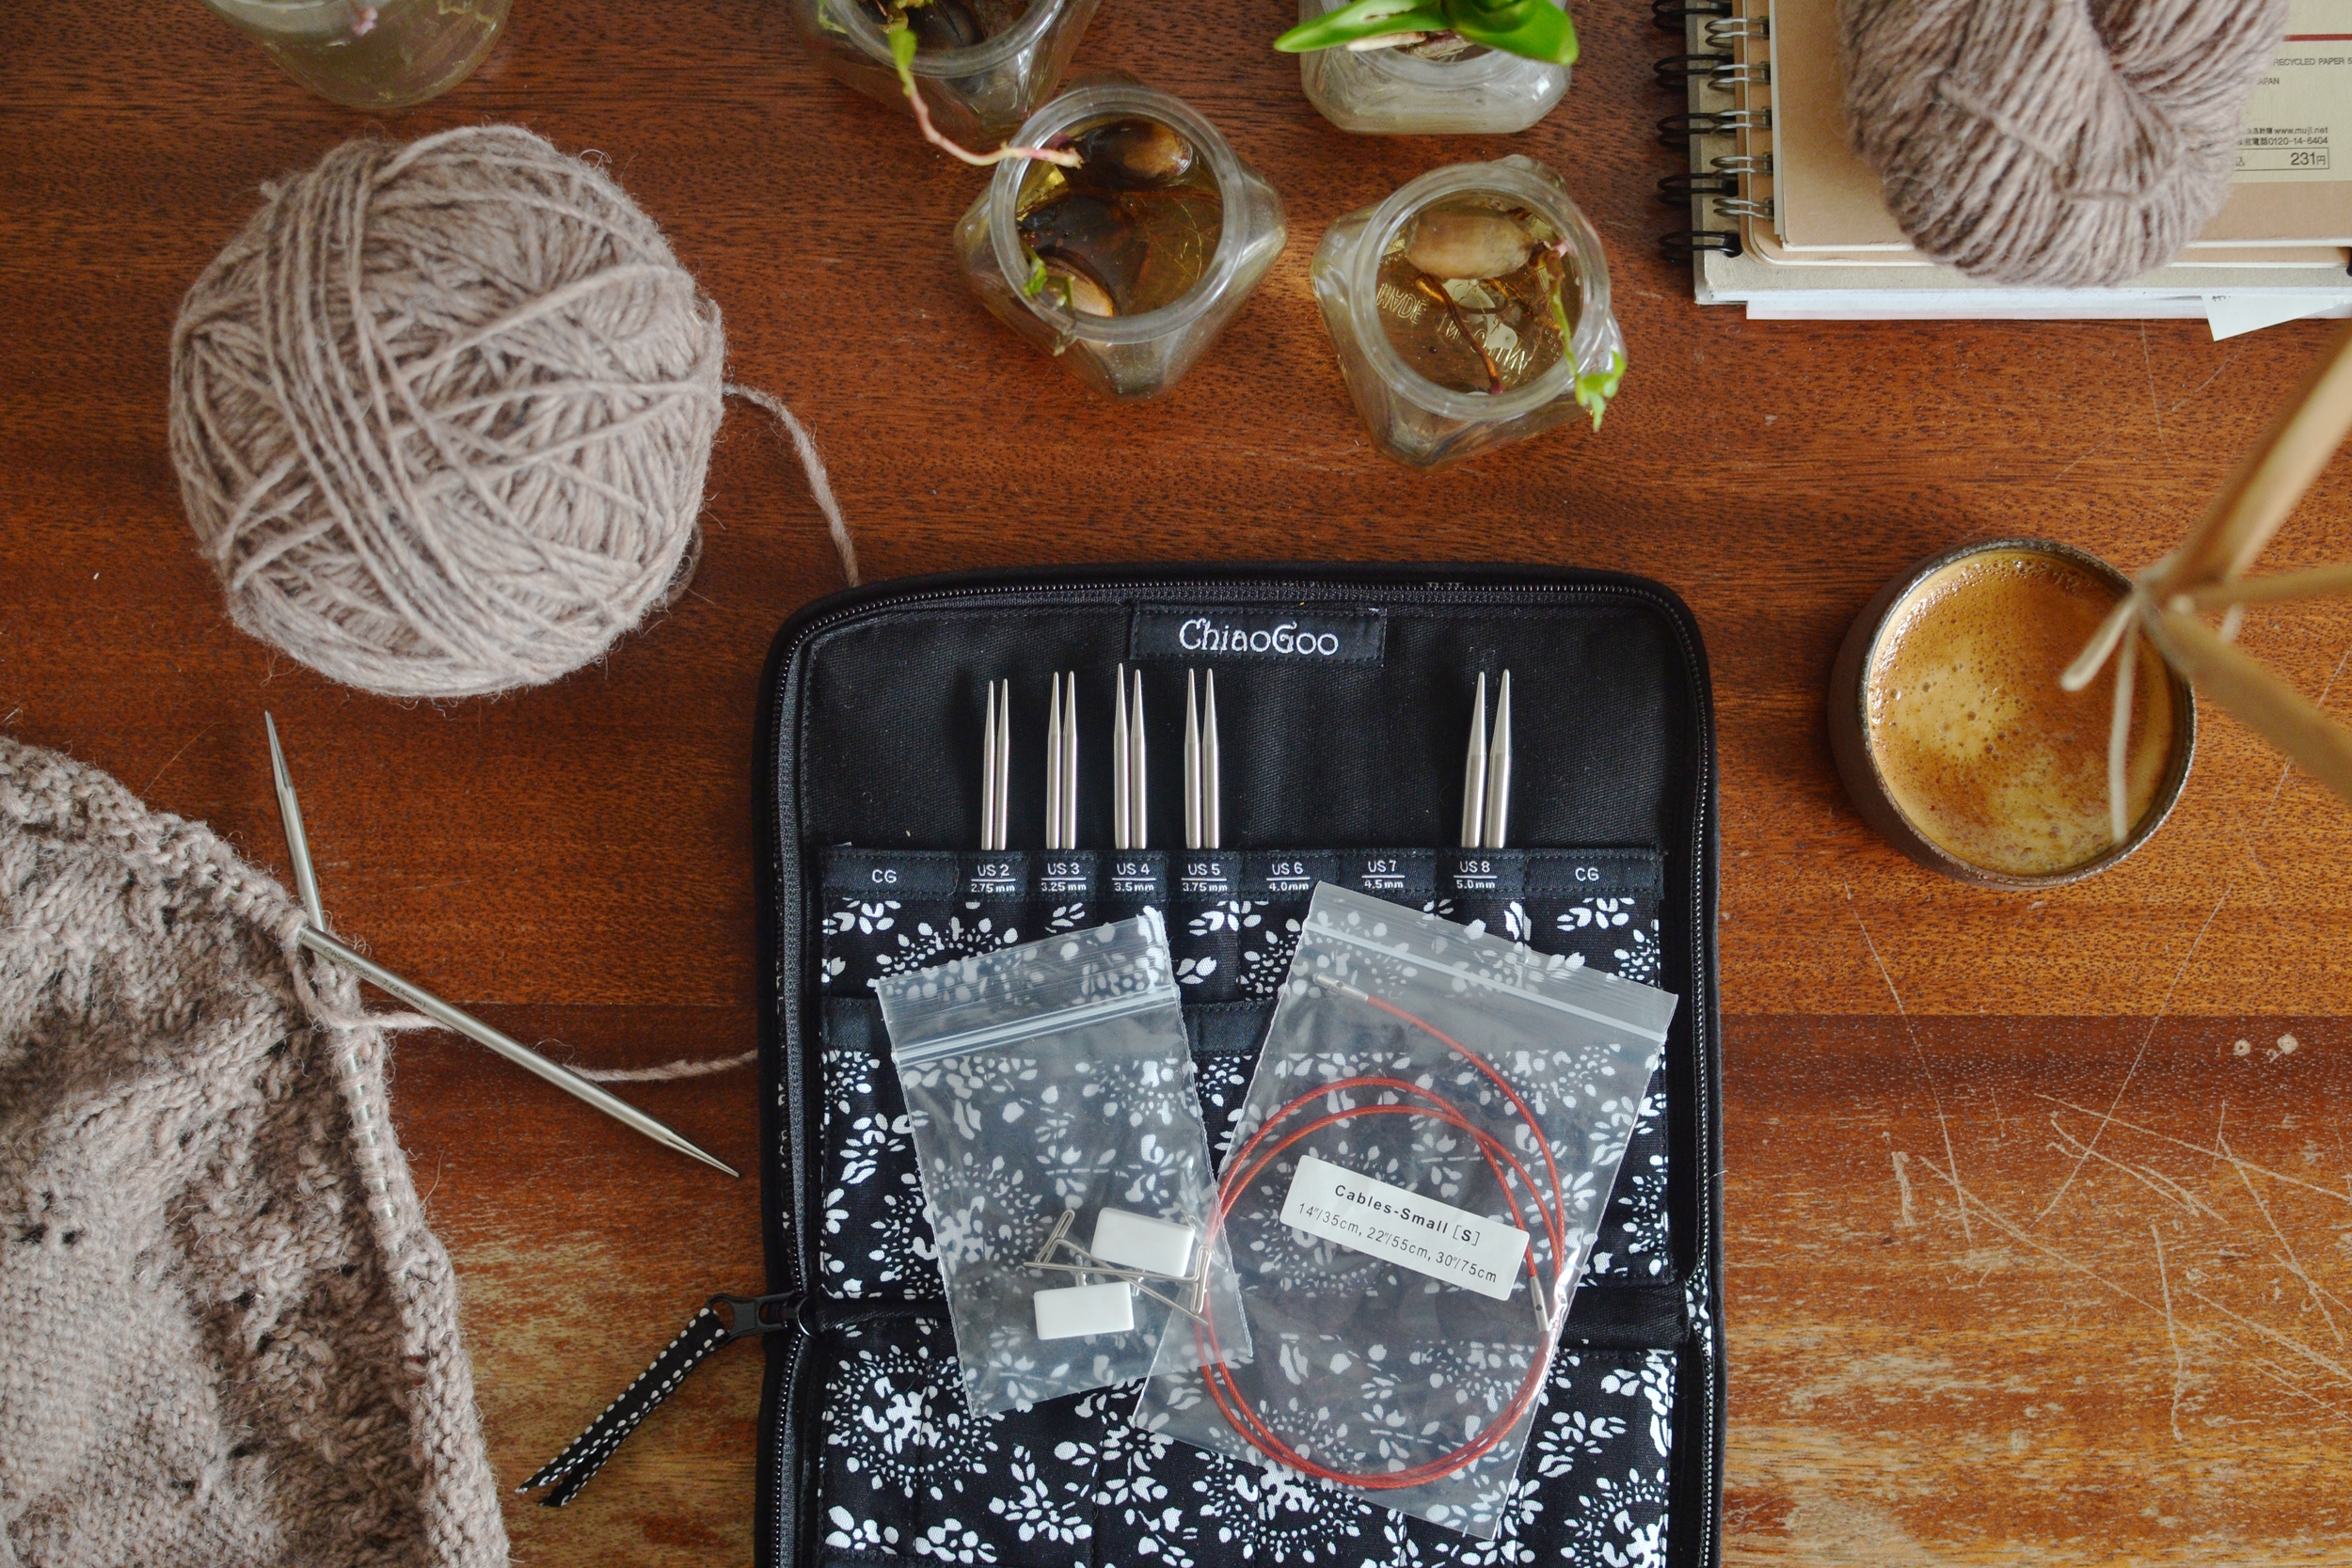 Favorite Gear: Chiaogoo Interchangeable Knitting Needles - Budget